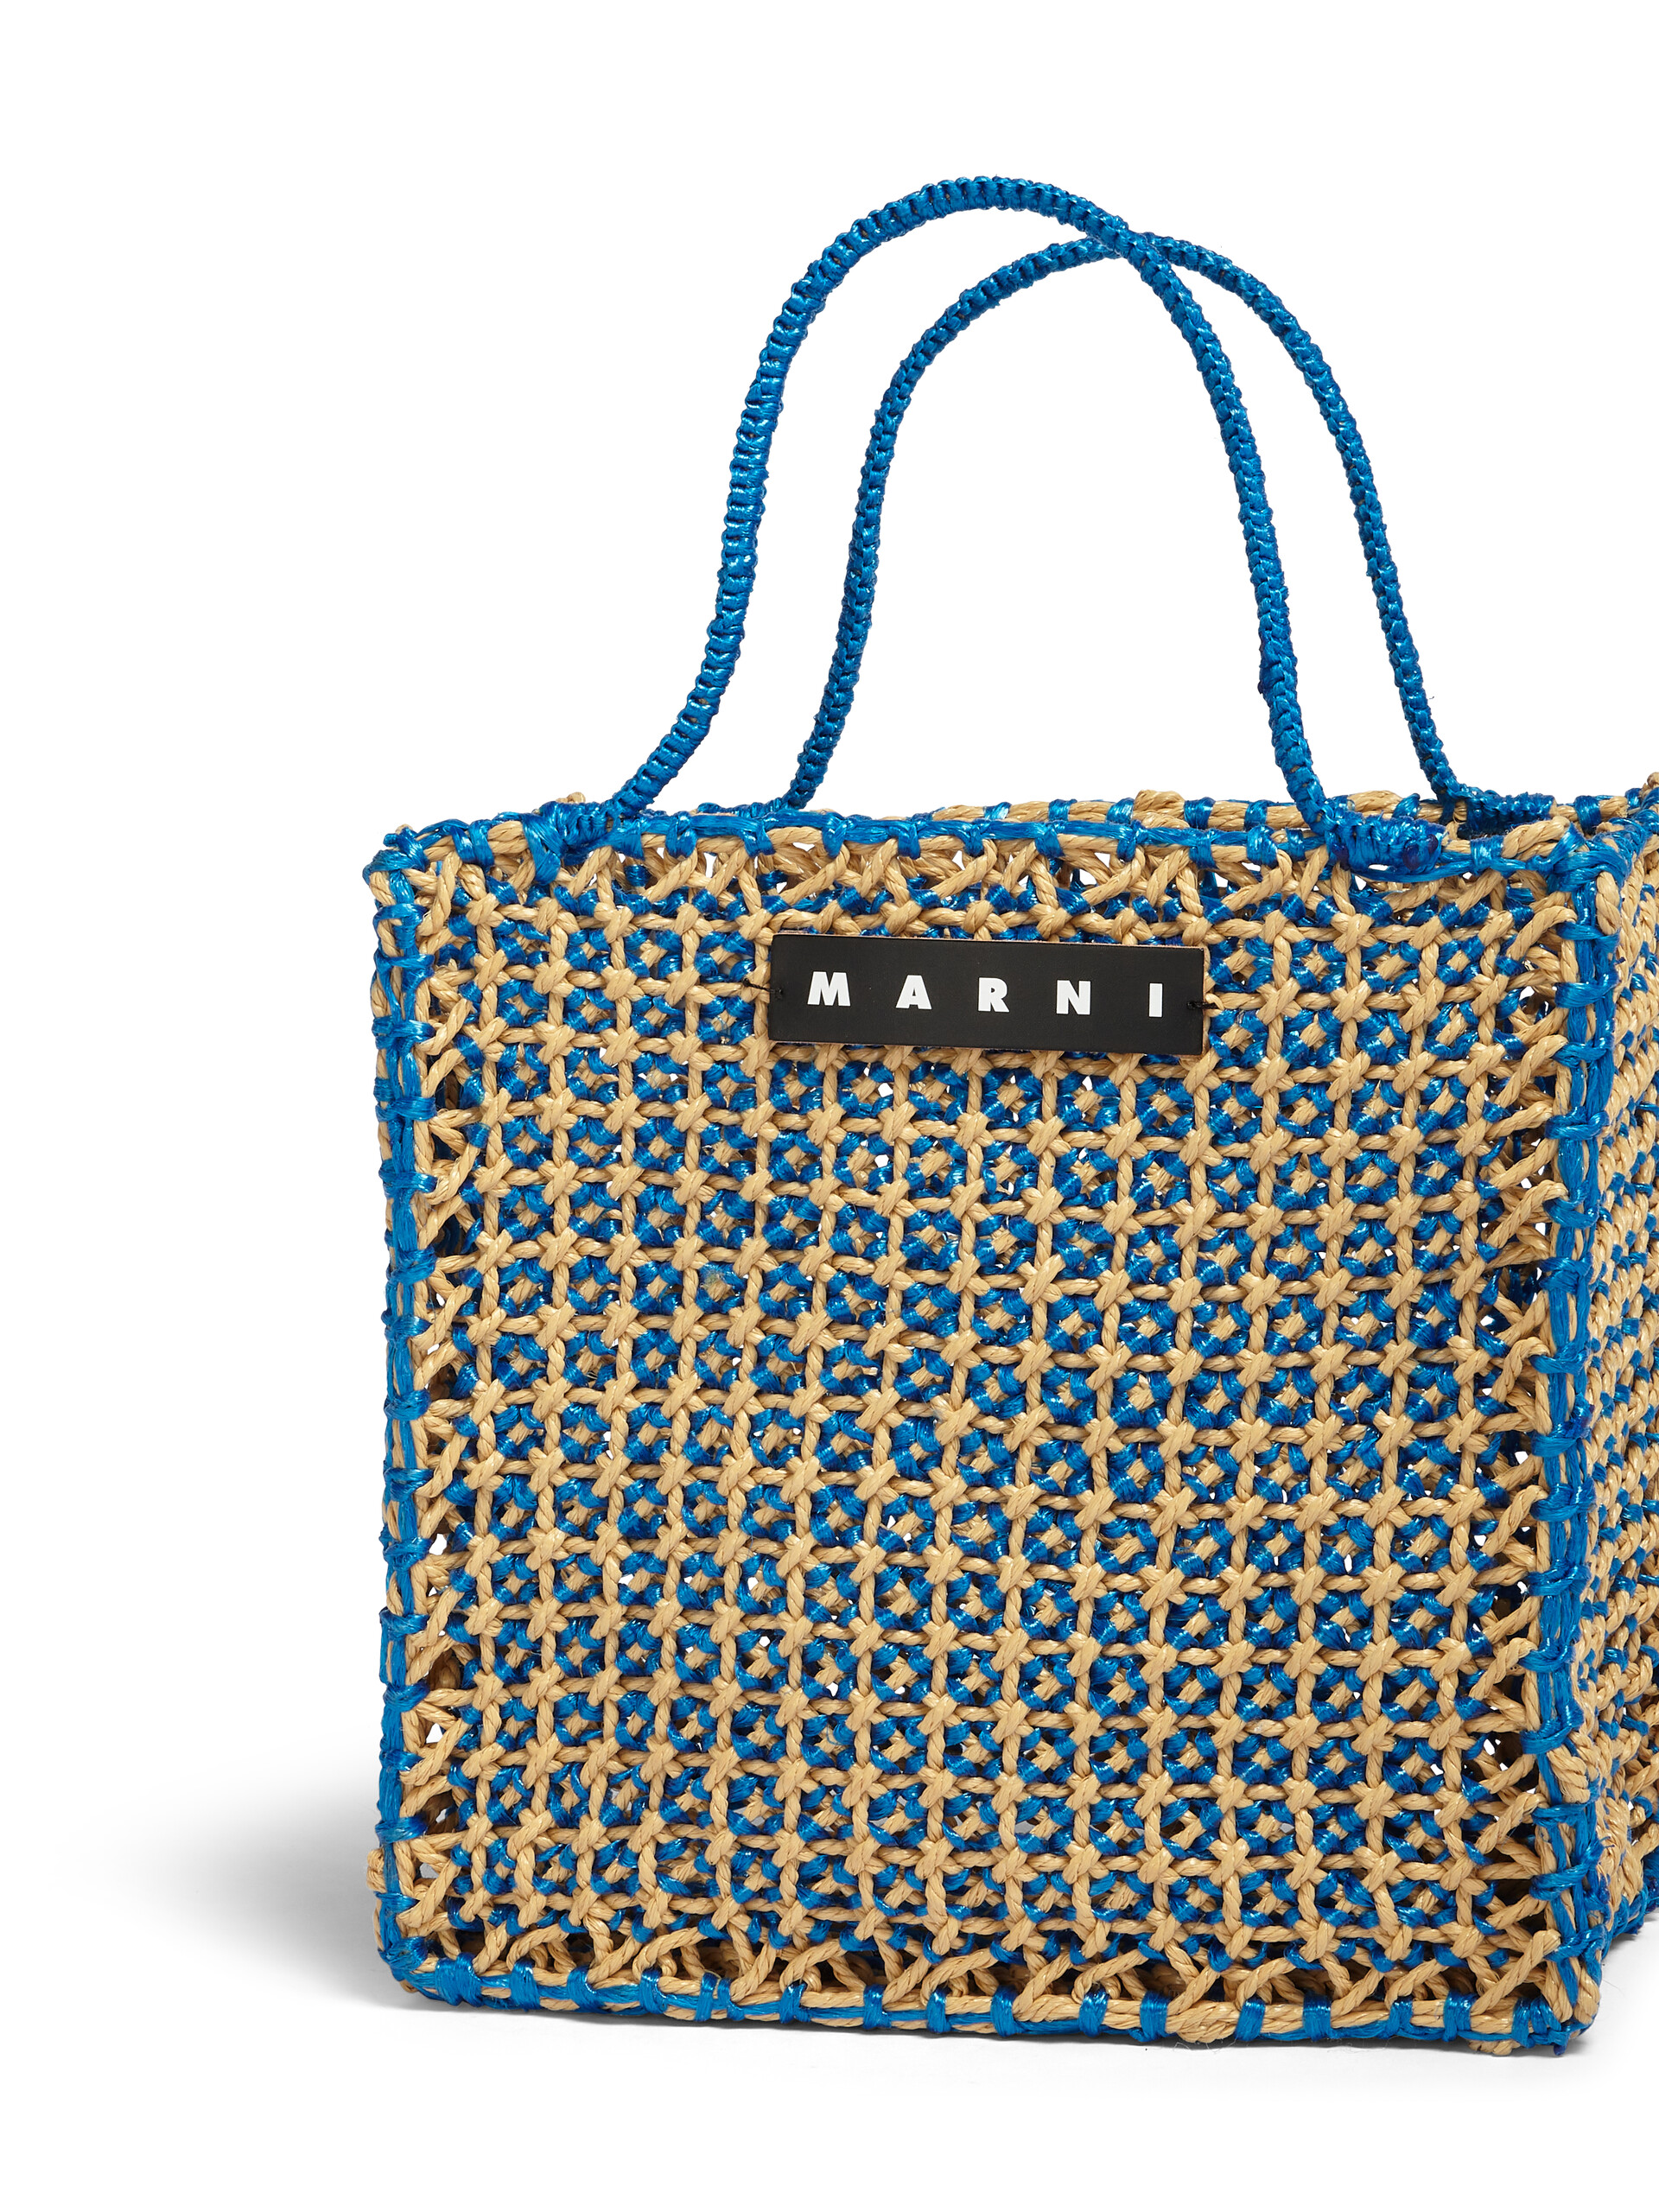 MARNI MARKET JURTA large bag in pale blue and beige crochet - Bags - Image 4